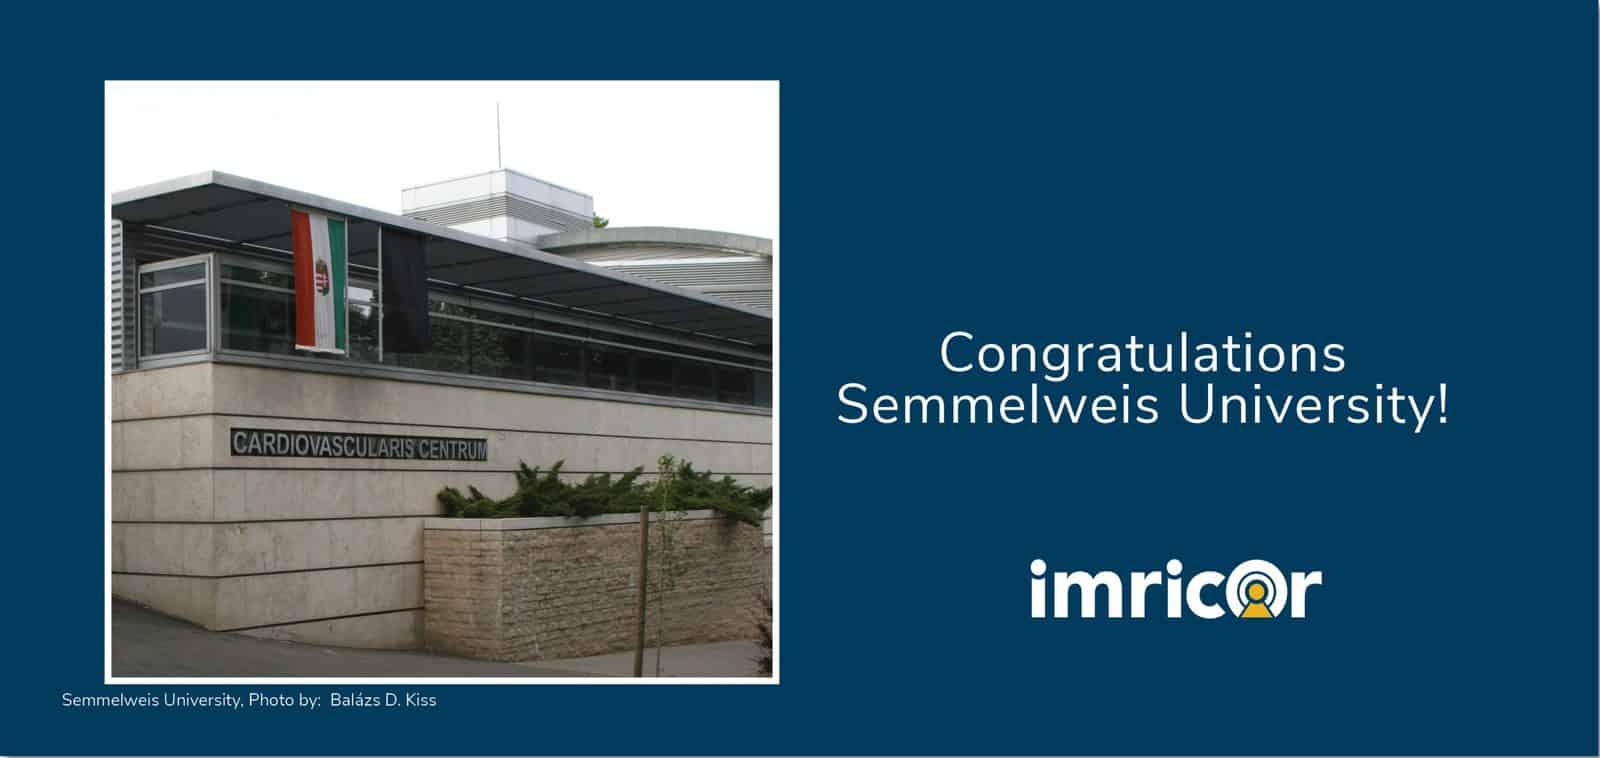 Semmelweis University Heart and Vascular Centre Established as Imricor’s Eleventh iCMR Site